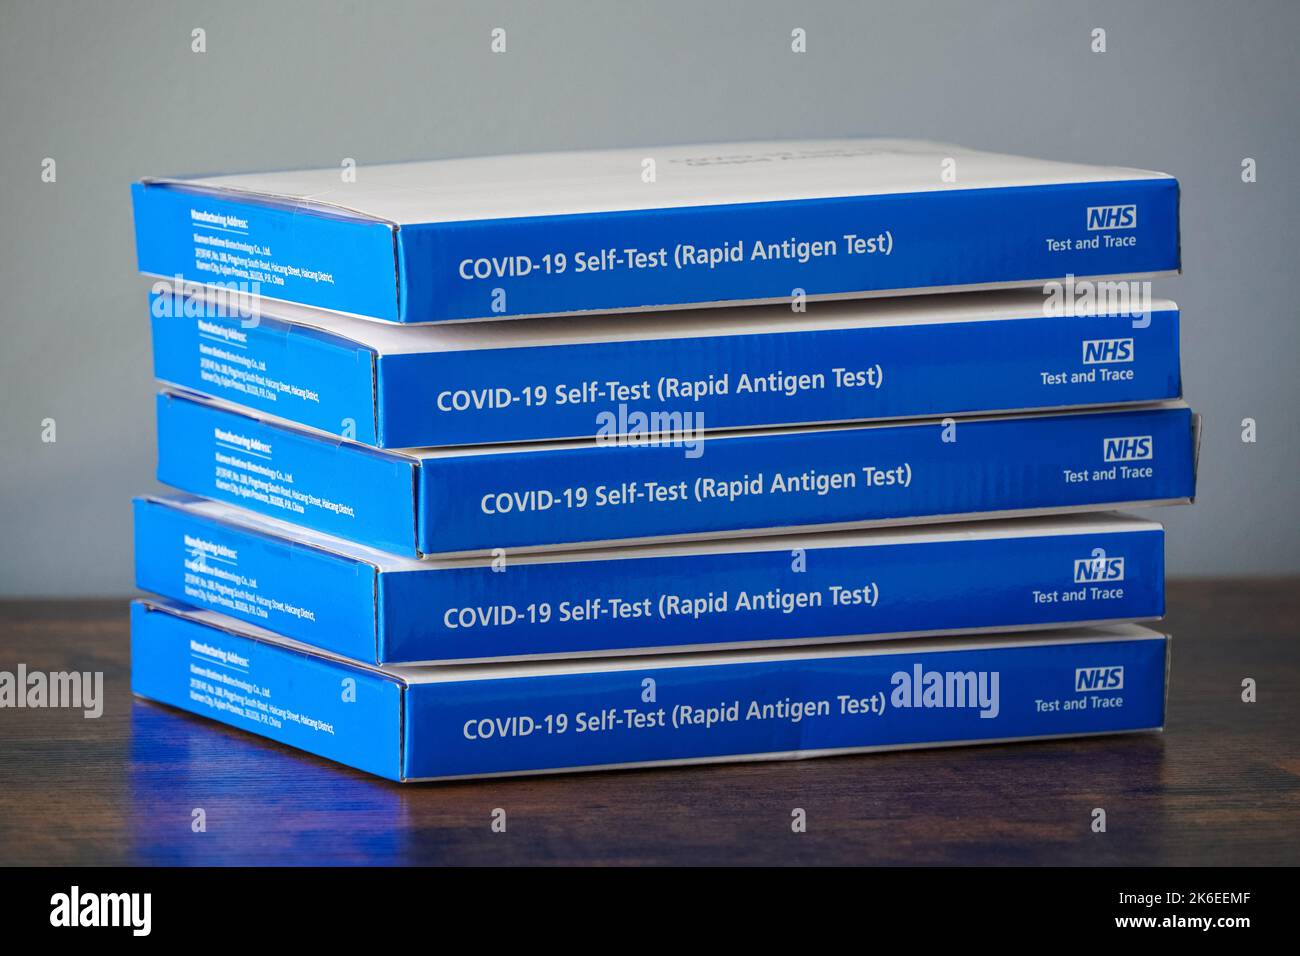 Covid-19 Self-test, Rapid antigen test kit, NHS self-testing kit Stock Photo